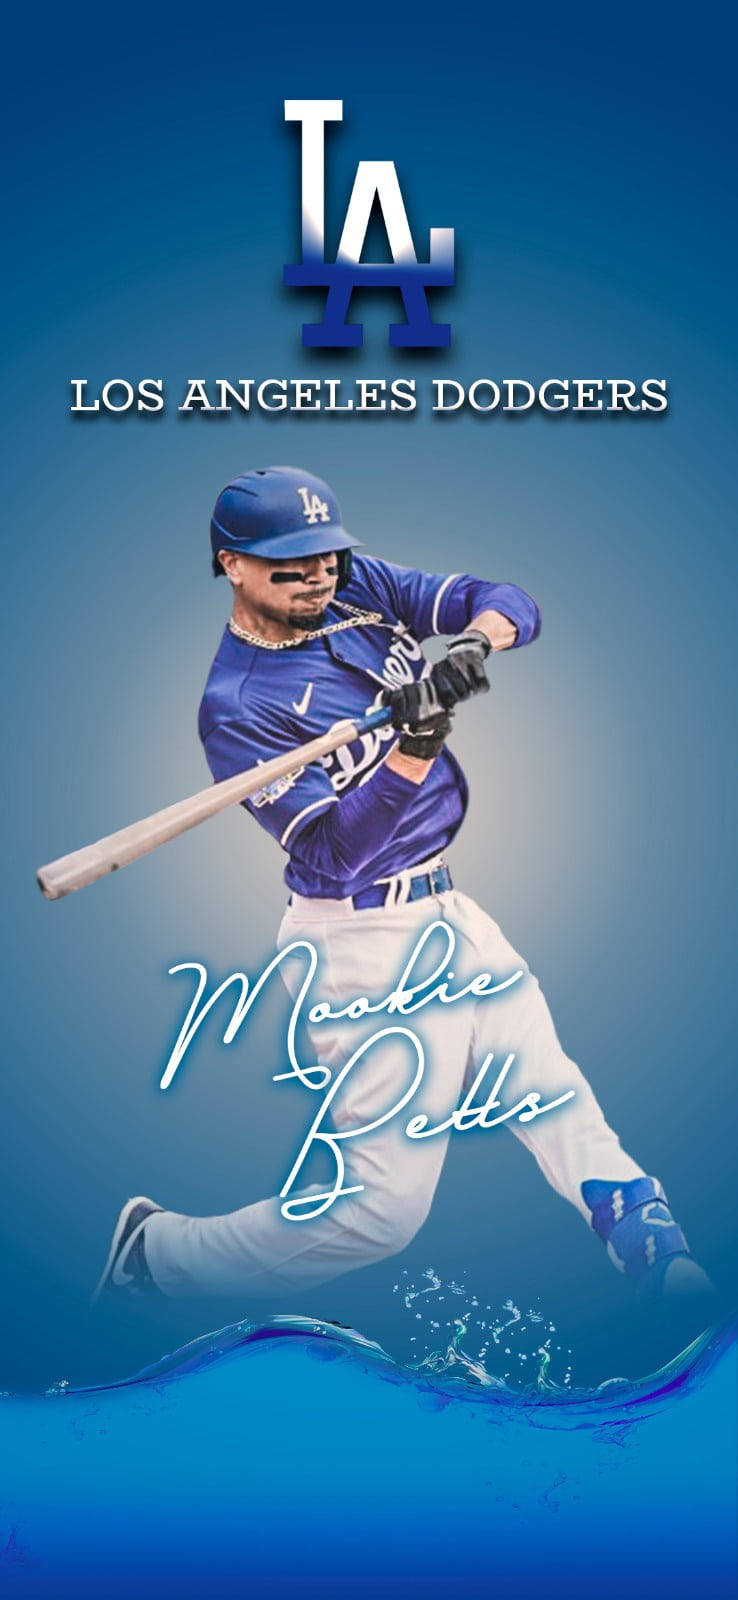 Los Angeles Dodgers Mookie Betts Wallpaper